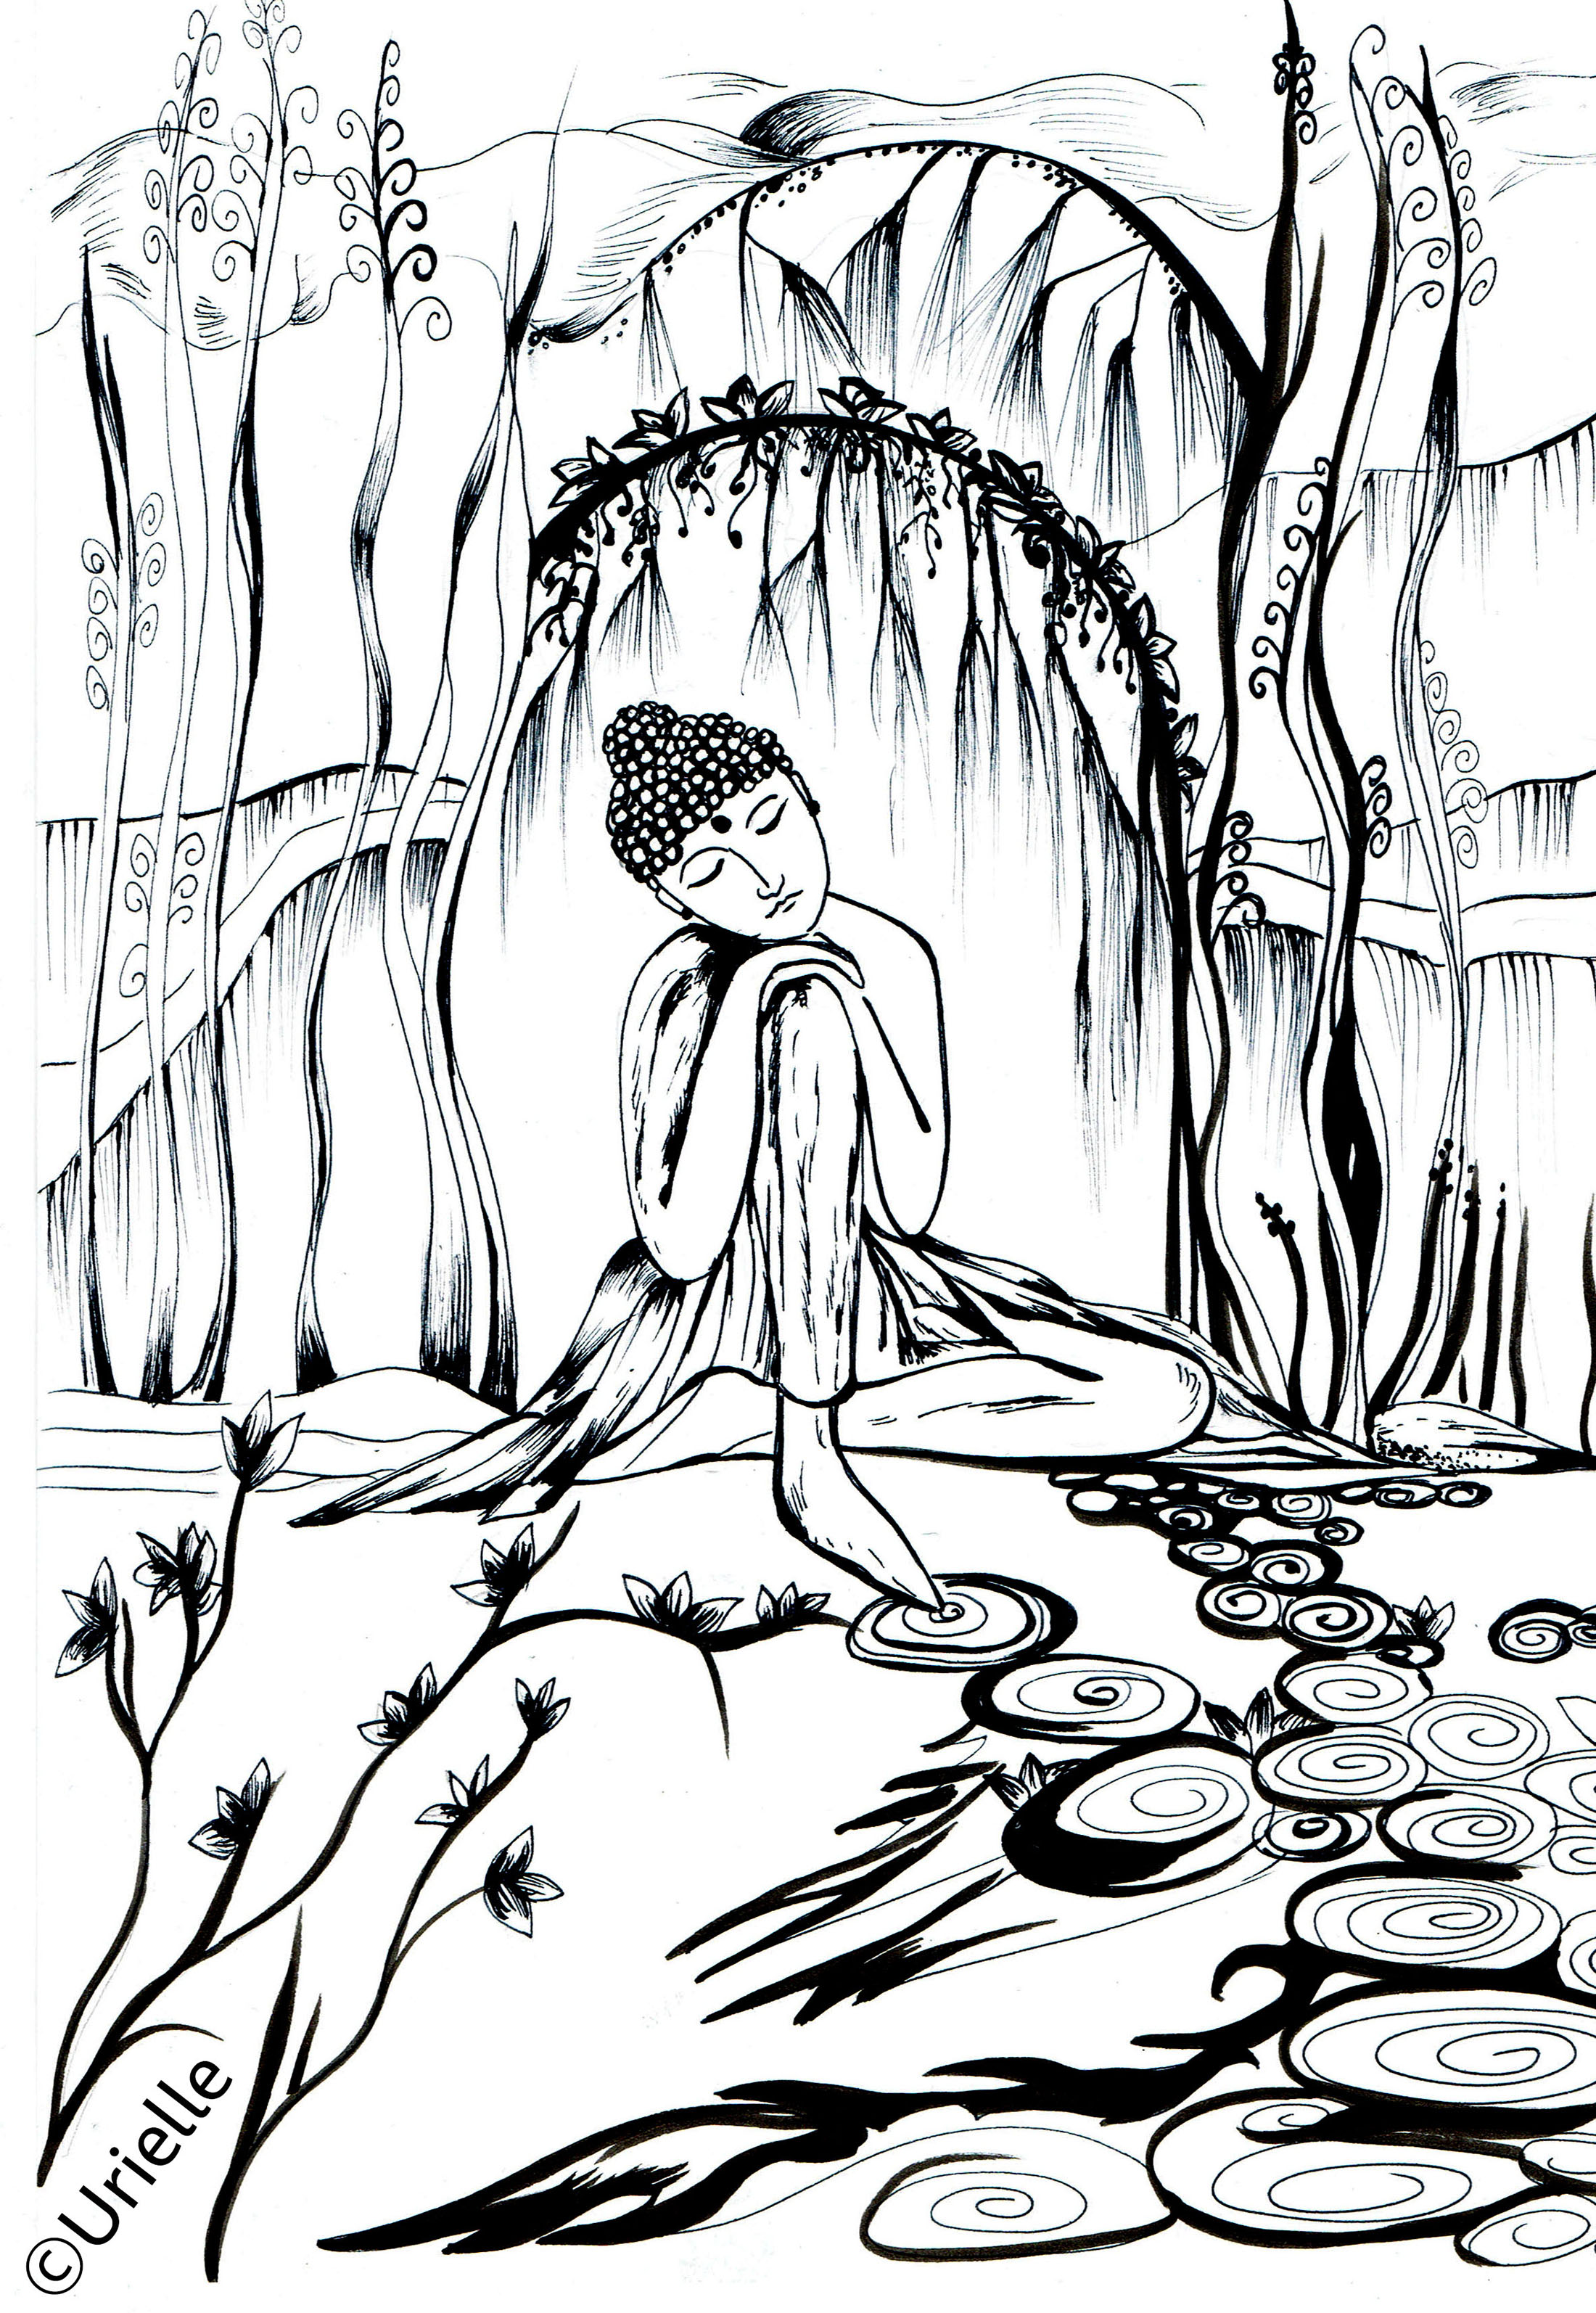 Goddess meditating in her cave, Artist : Urielle